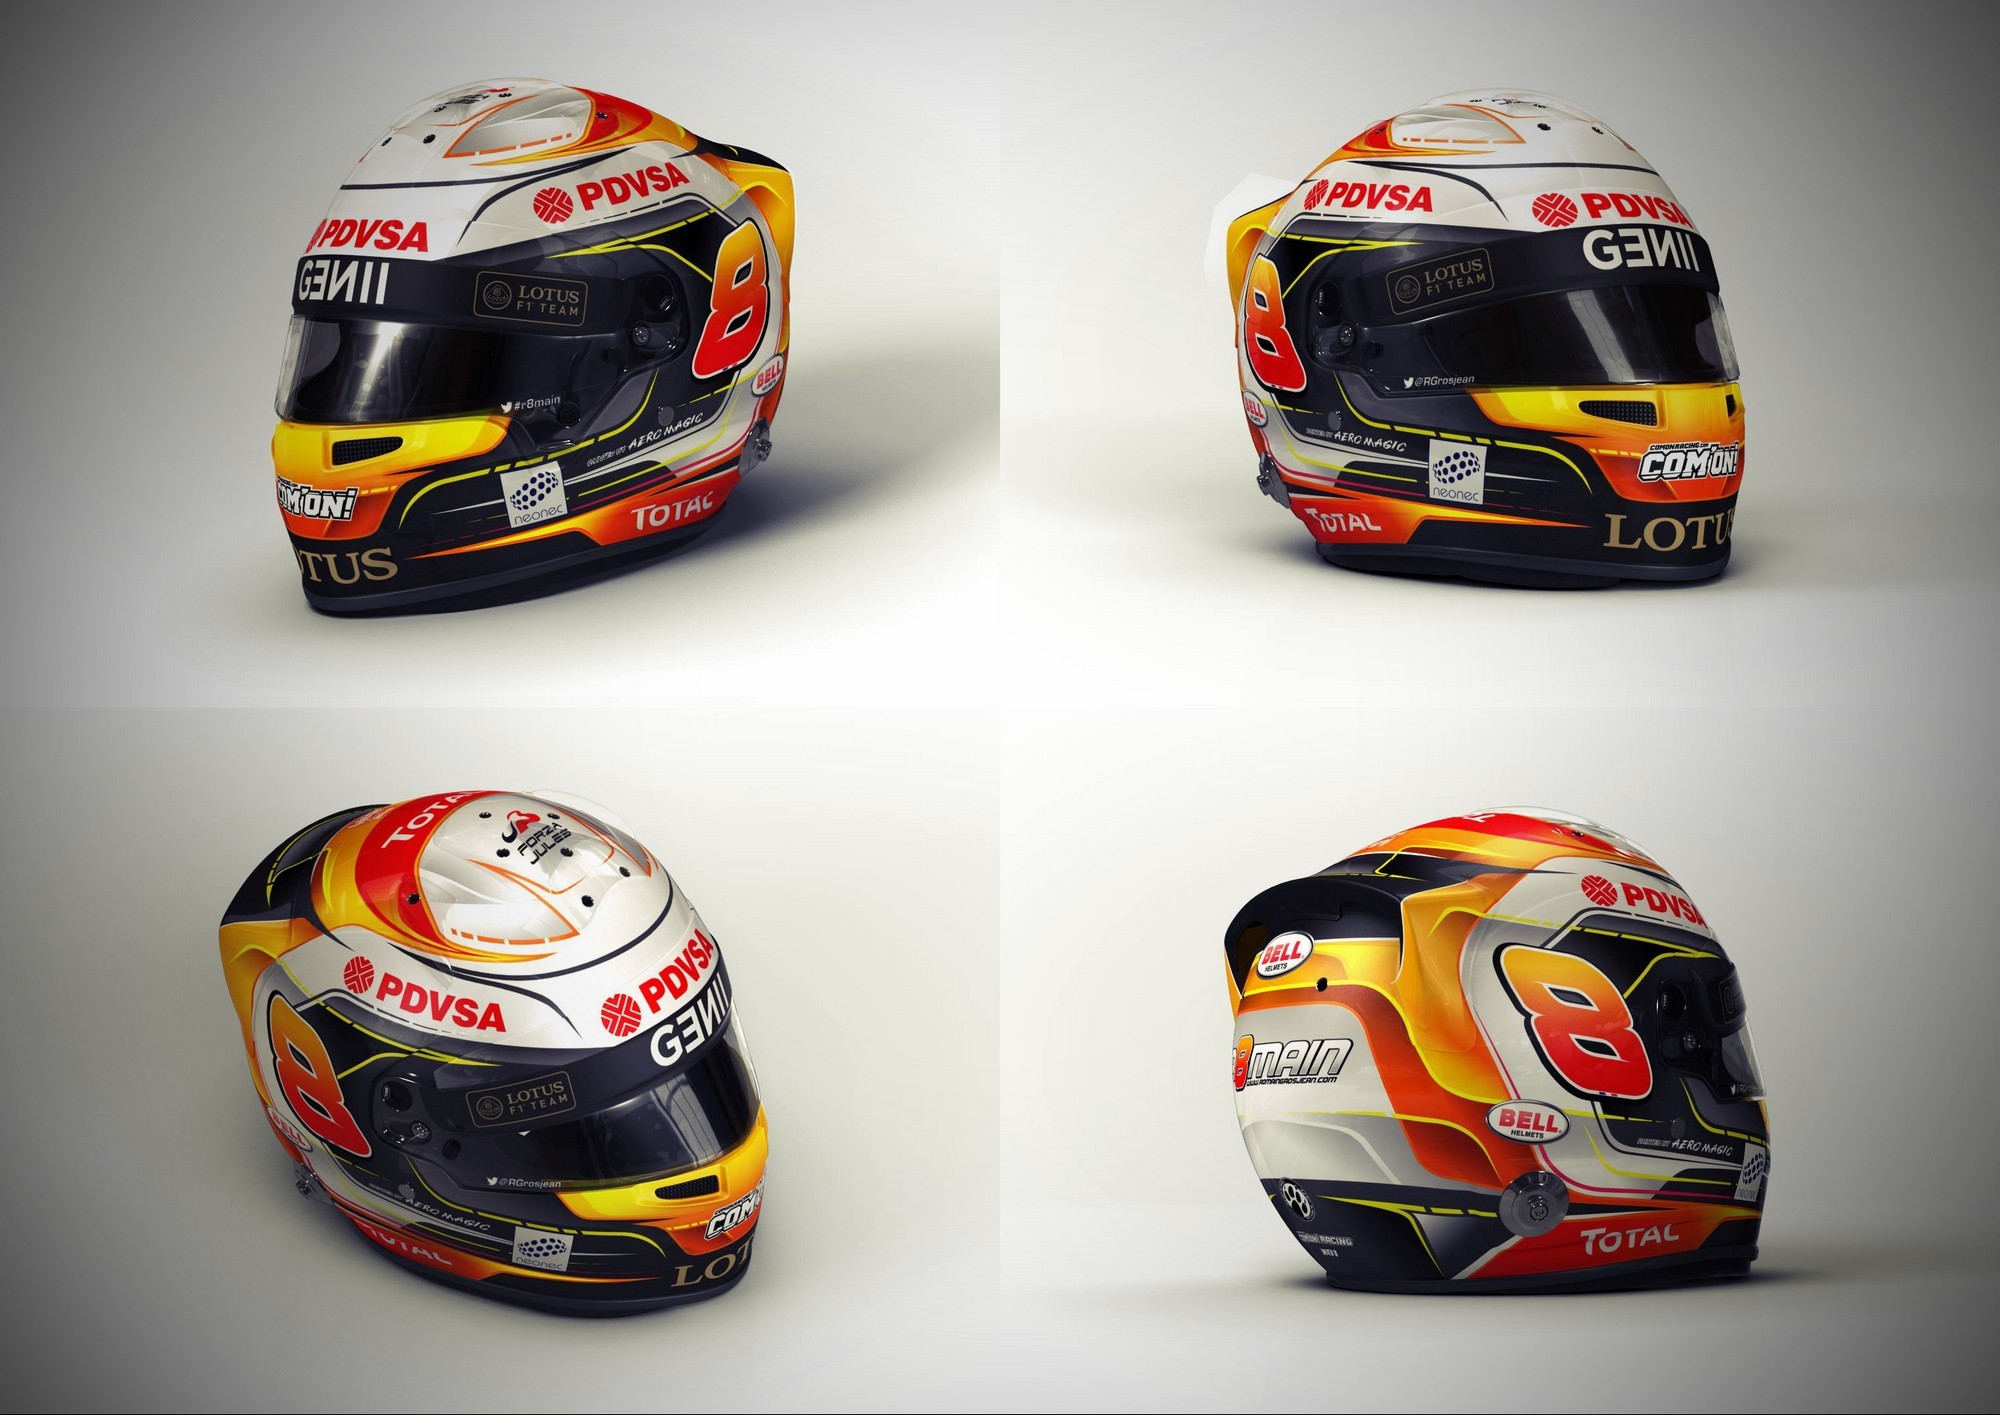 Шлем Романа Грожана на сезон 2015 года | 2015 helmet of Romain Grosjean